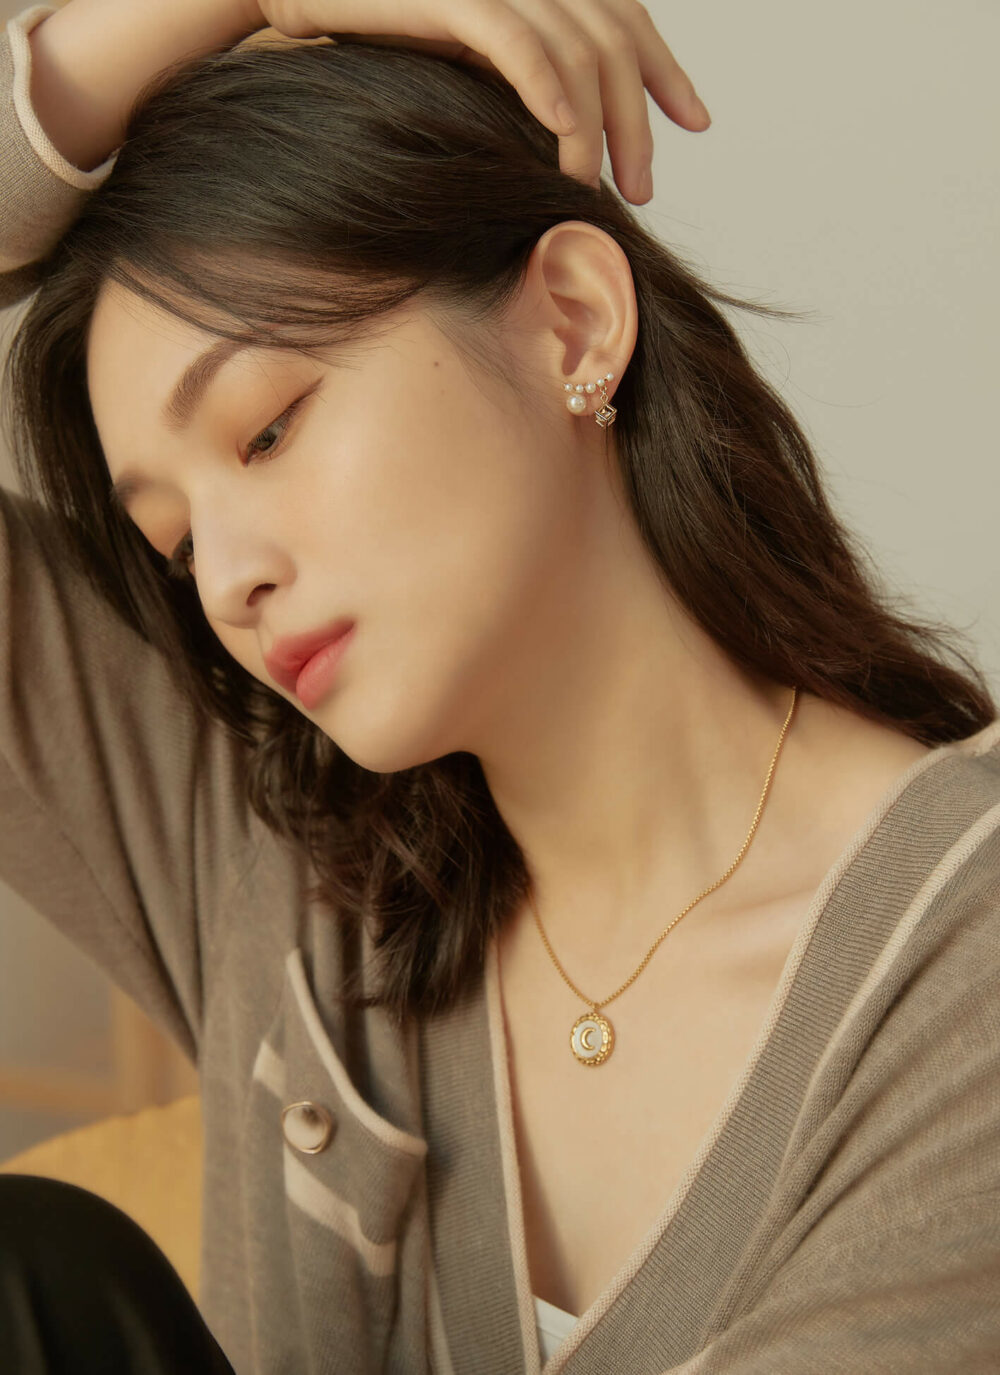 Eco安珂,韓國飾品,韓國耳環,耳針式耳環,矽膠夾耳環,透明耳夾耳環,珍珠耳環